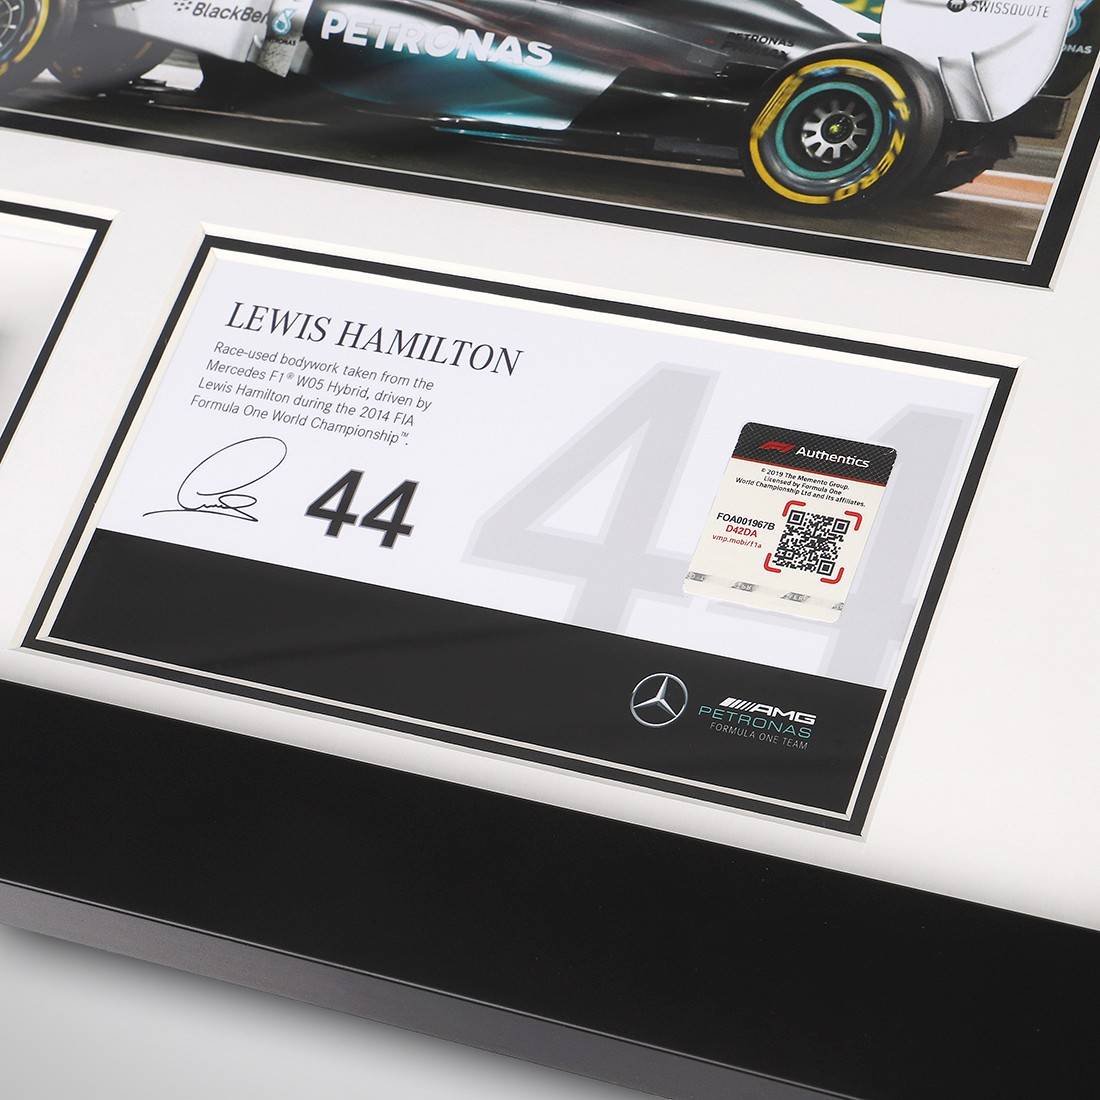 Lewis Hamilton 2014 Abu Dhabi British Flag Photo & Bodywork